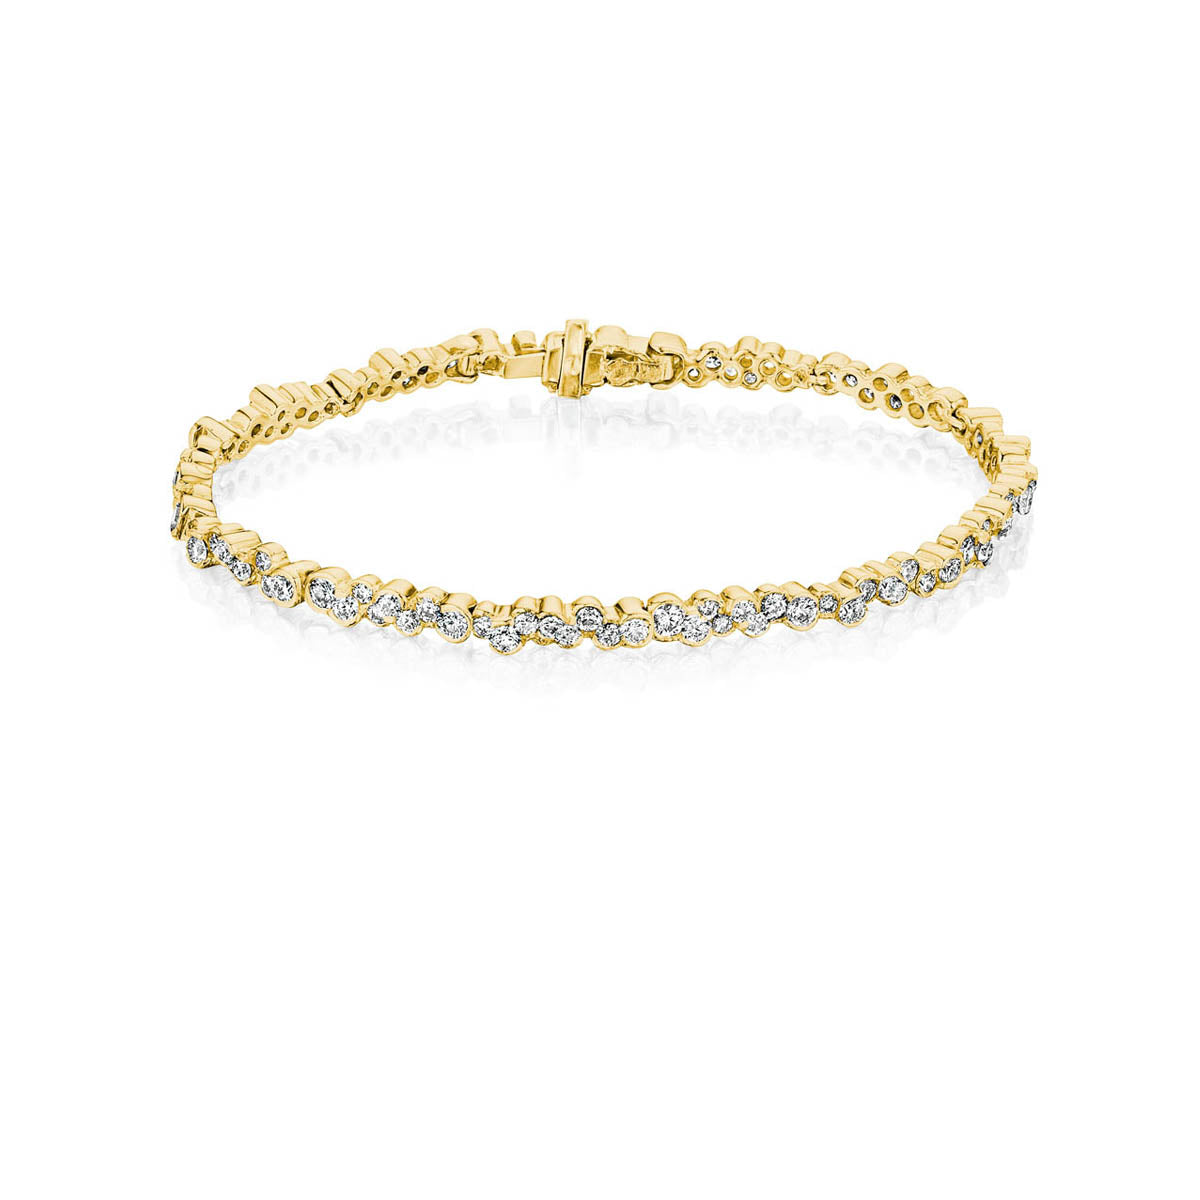 Gold bracelet featuring ideal cut diamonds by Chicago Jeweler, Lester Lampert..